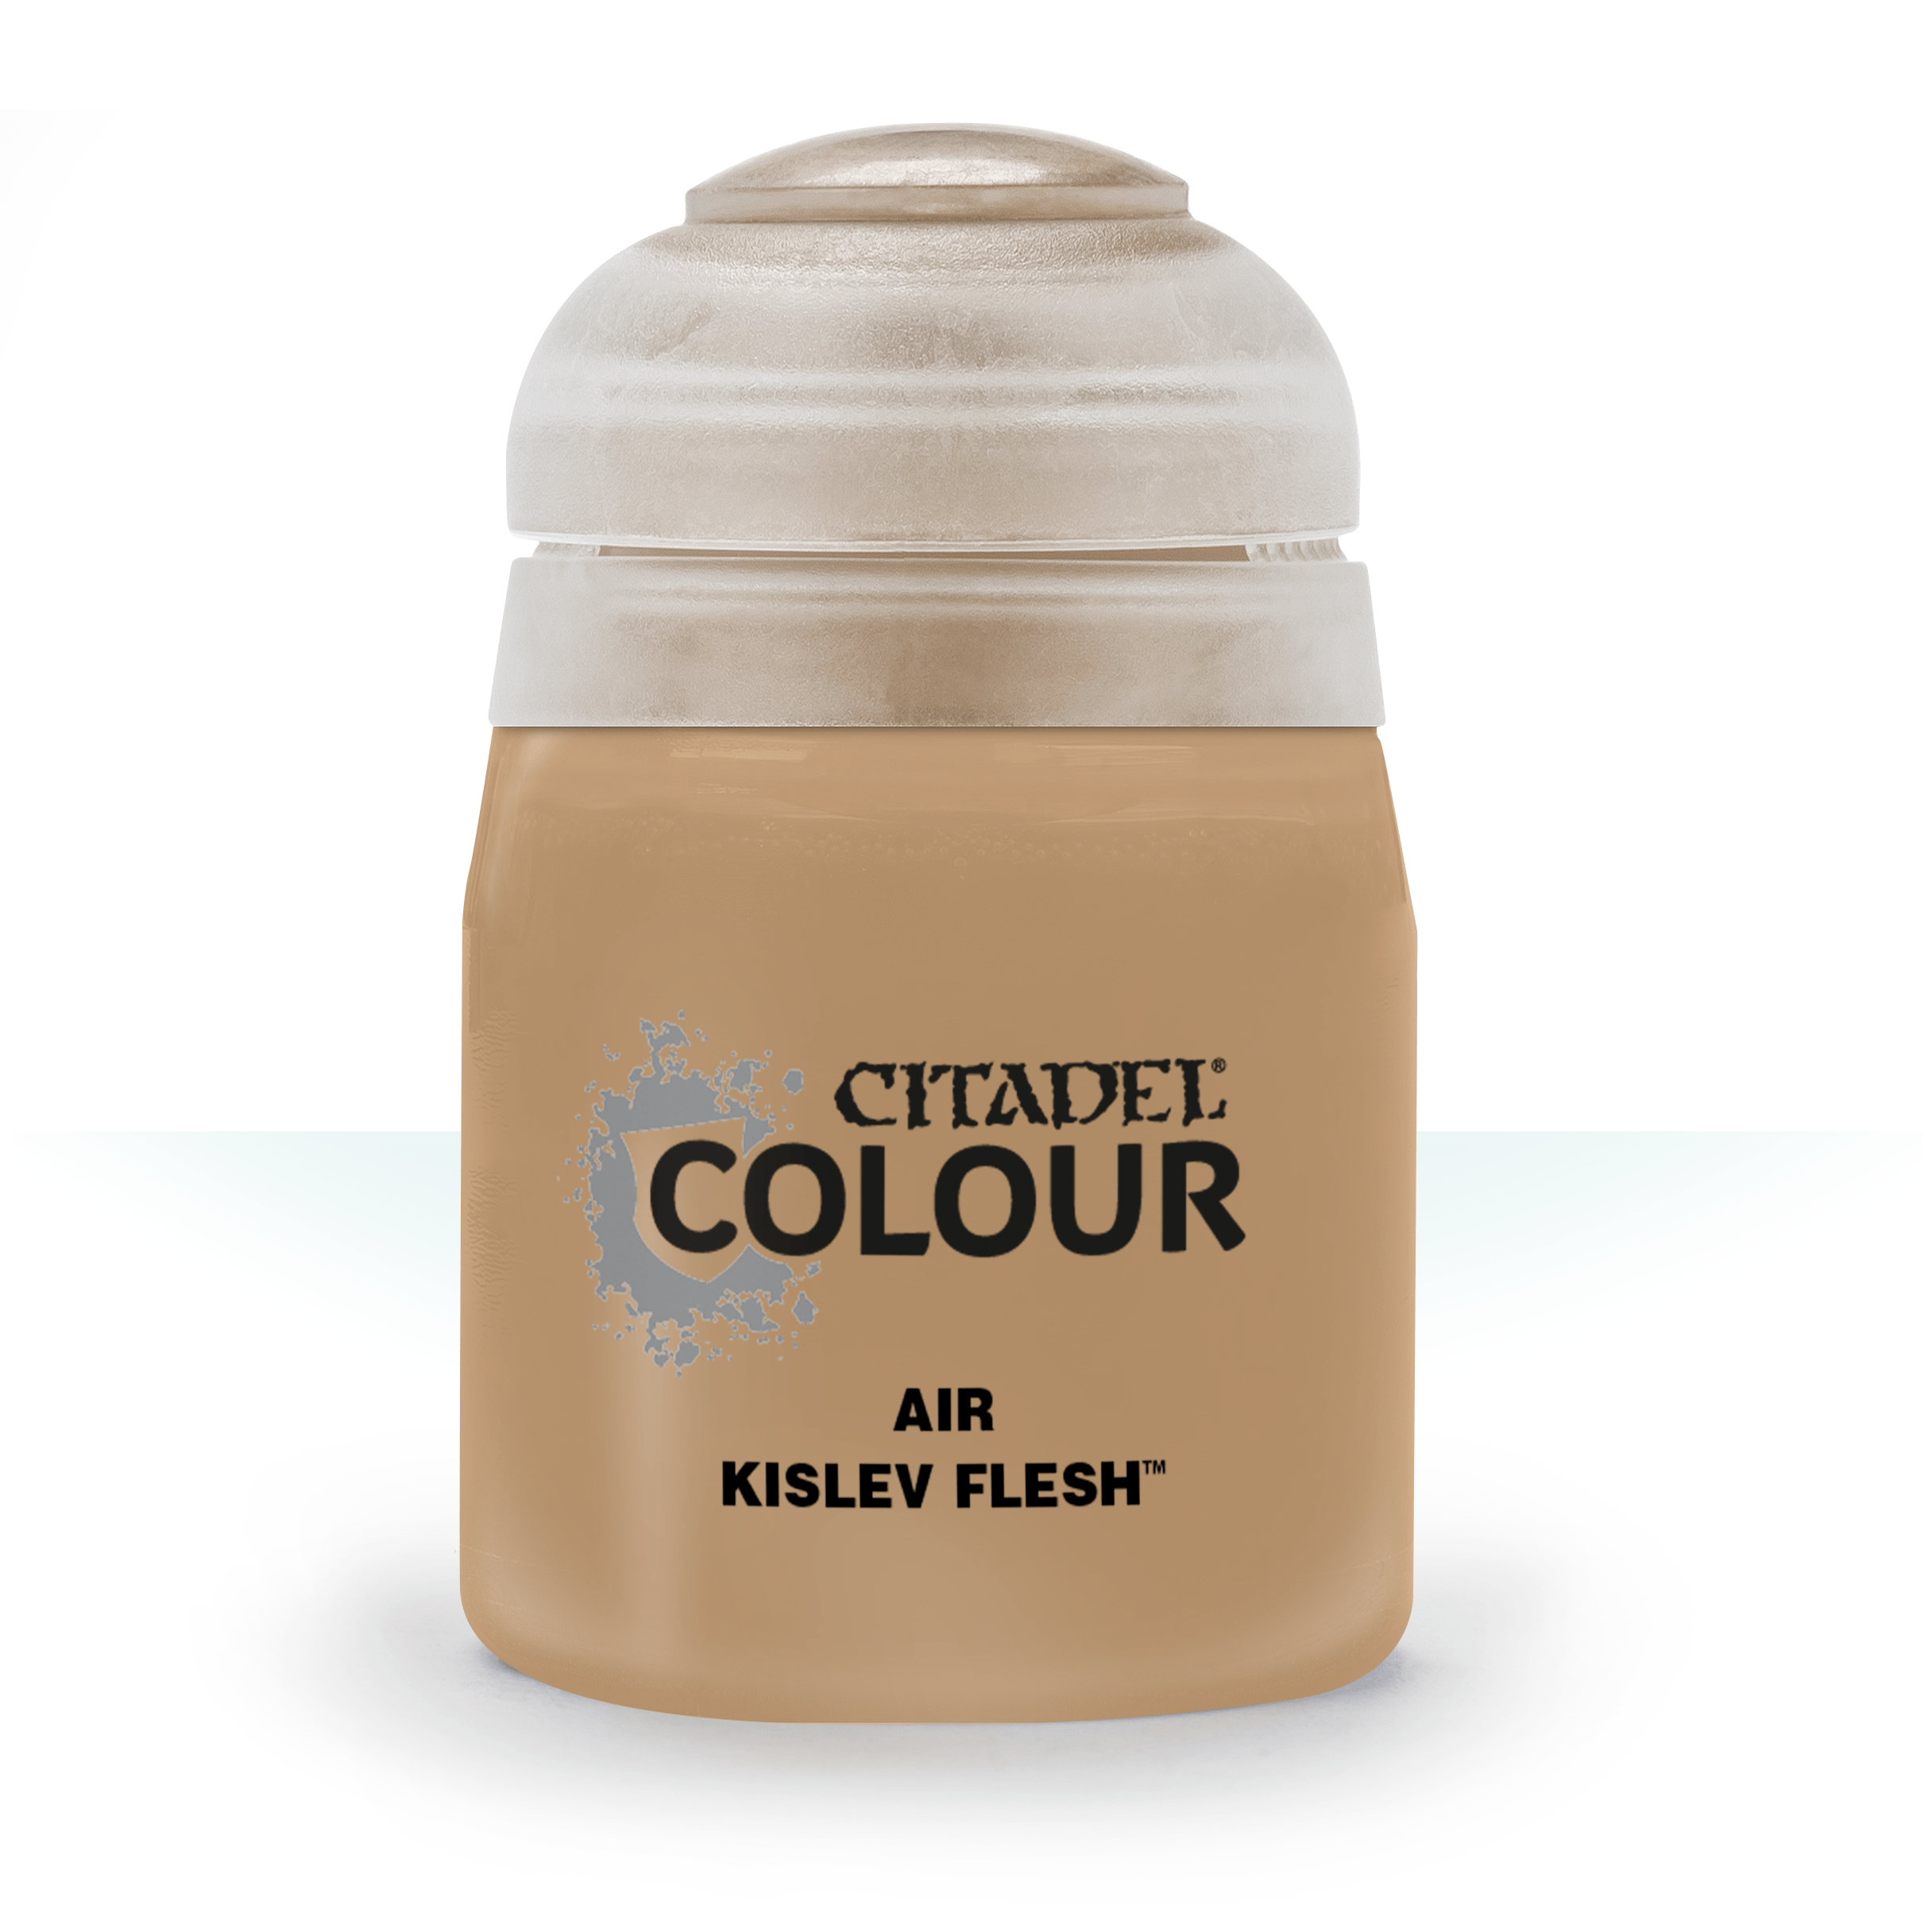 Kislev Flesh - Citadel Air Colour